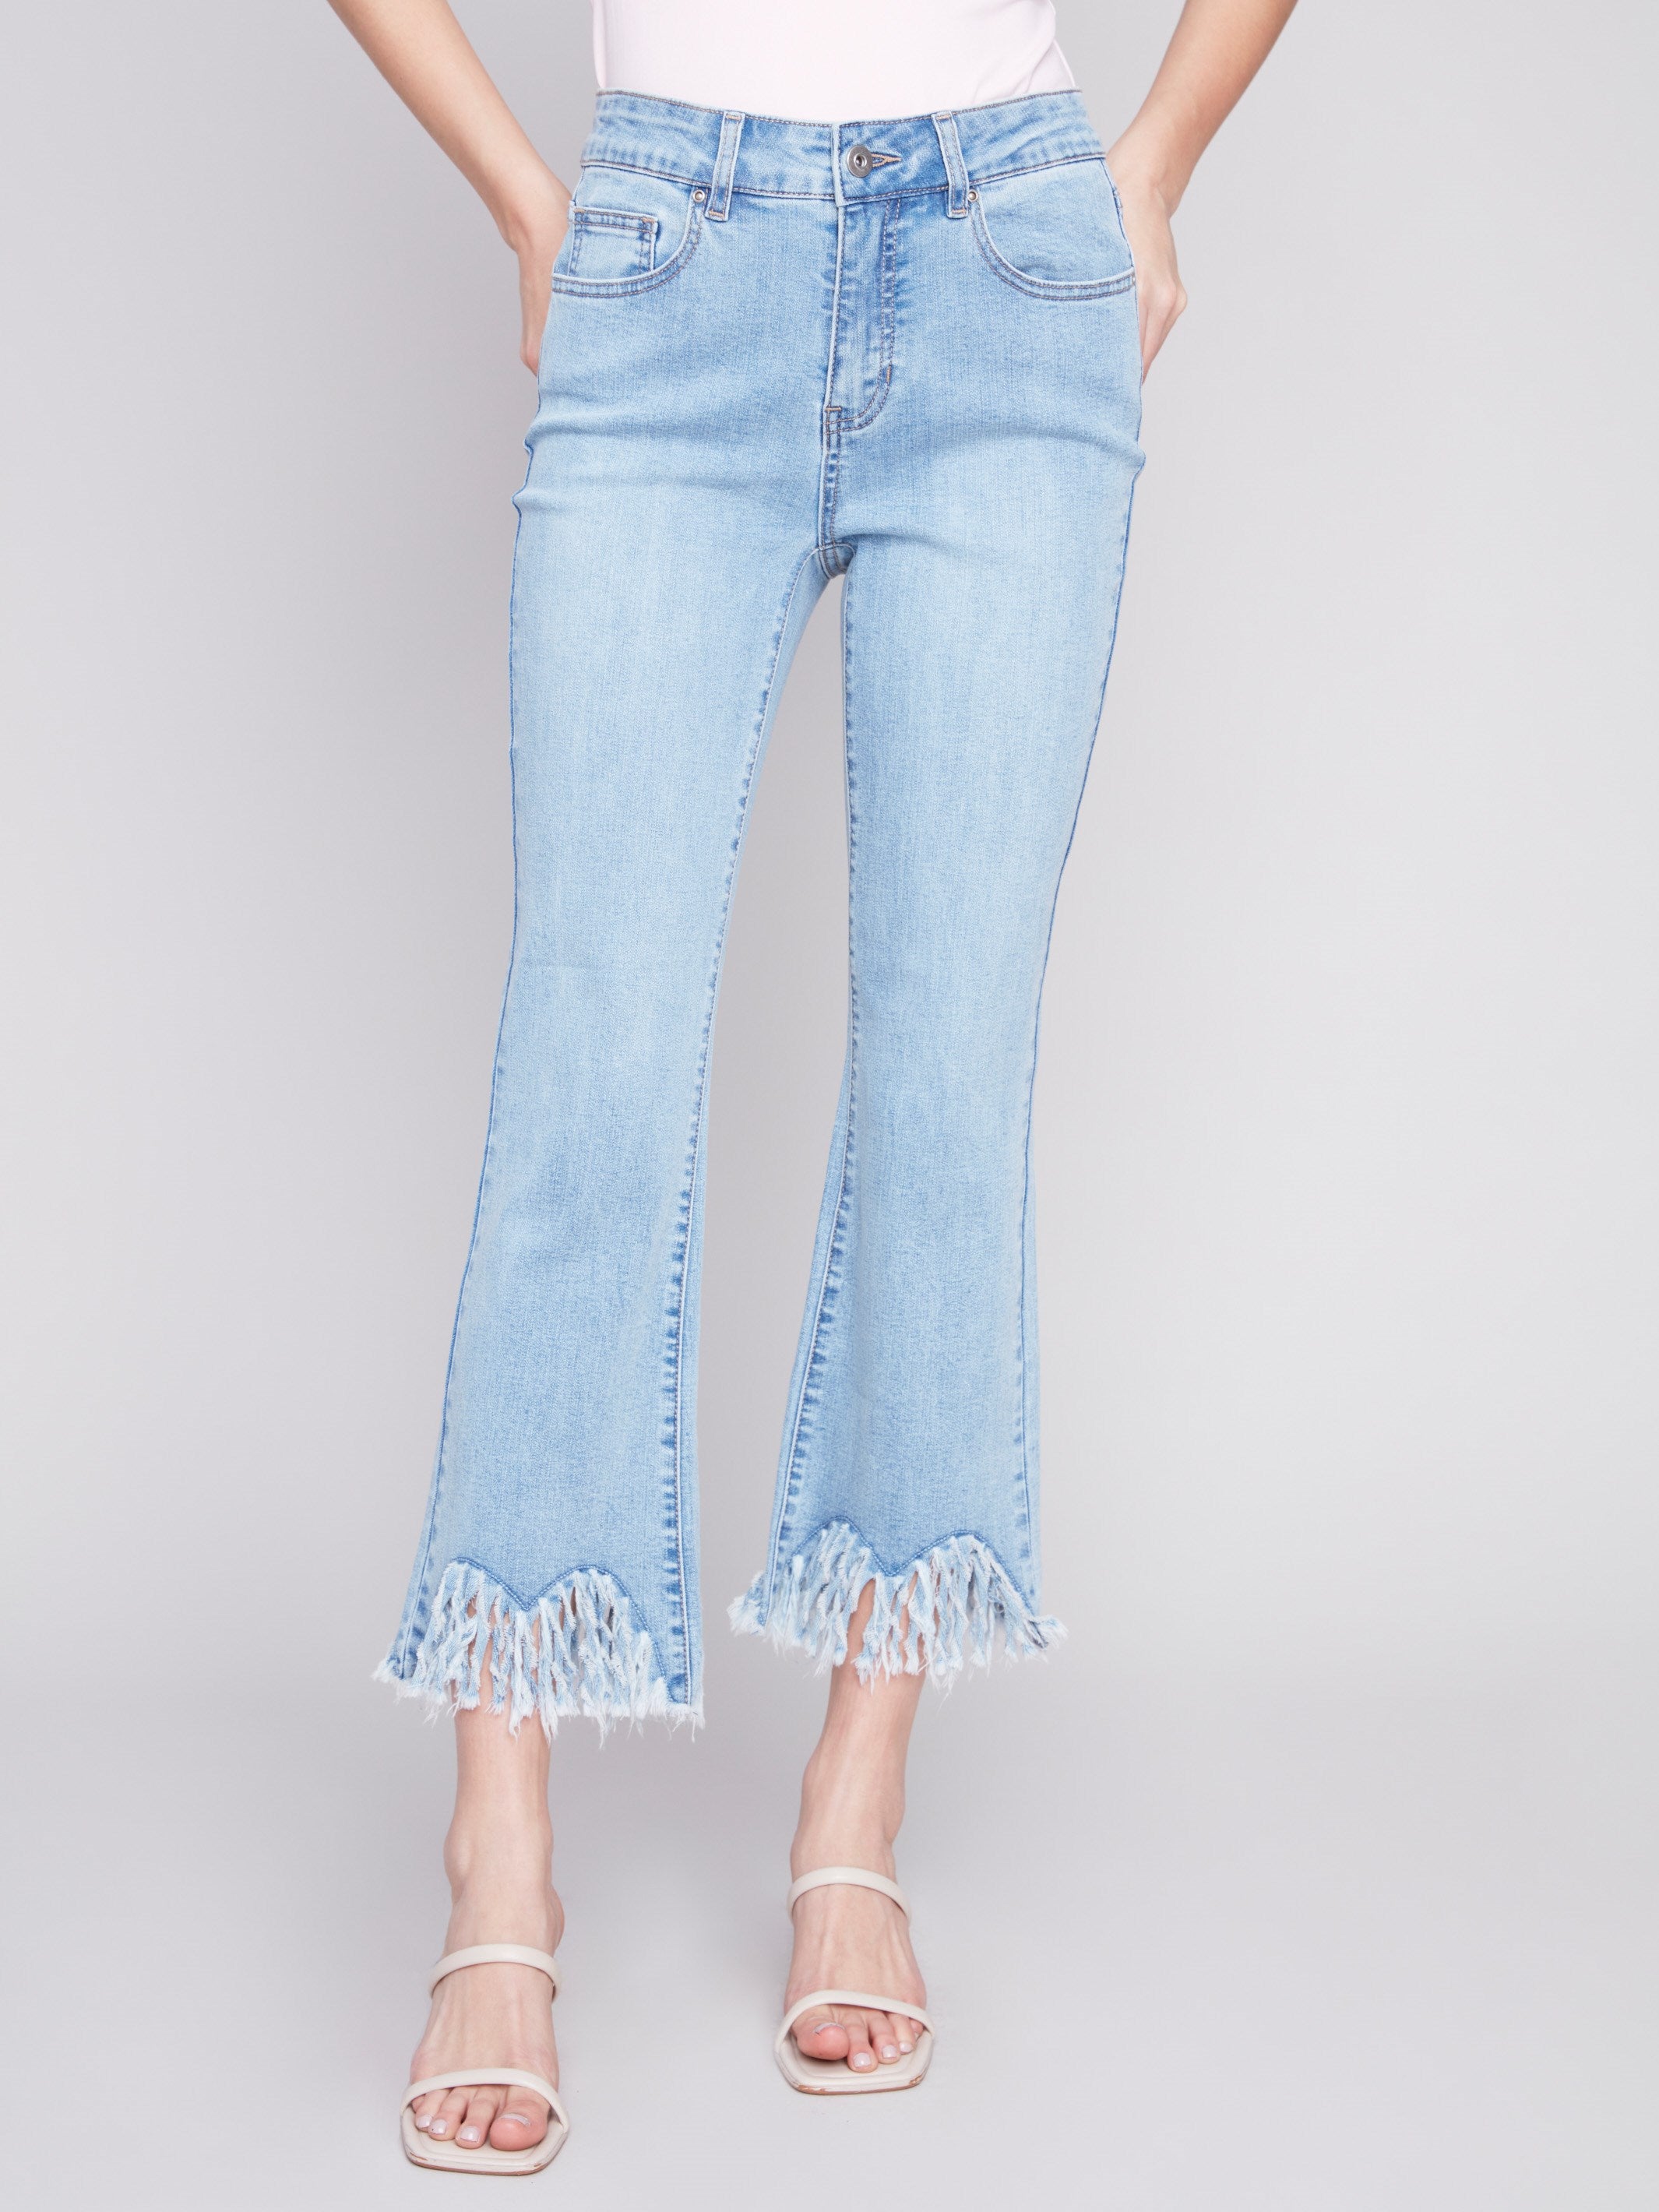 Charlie B Cropped Jeans with Fringed Hem - Light Blue - Image 2